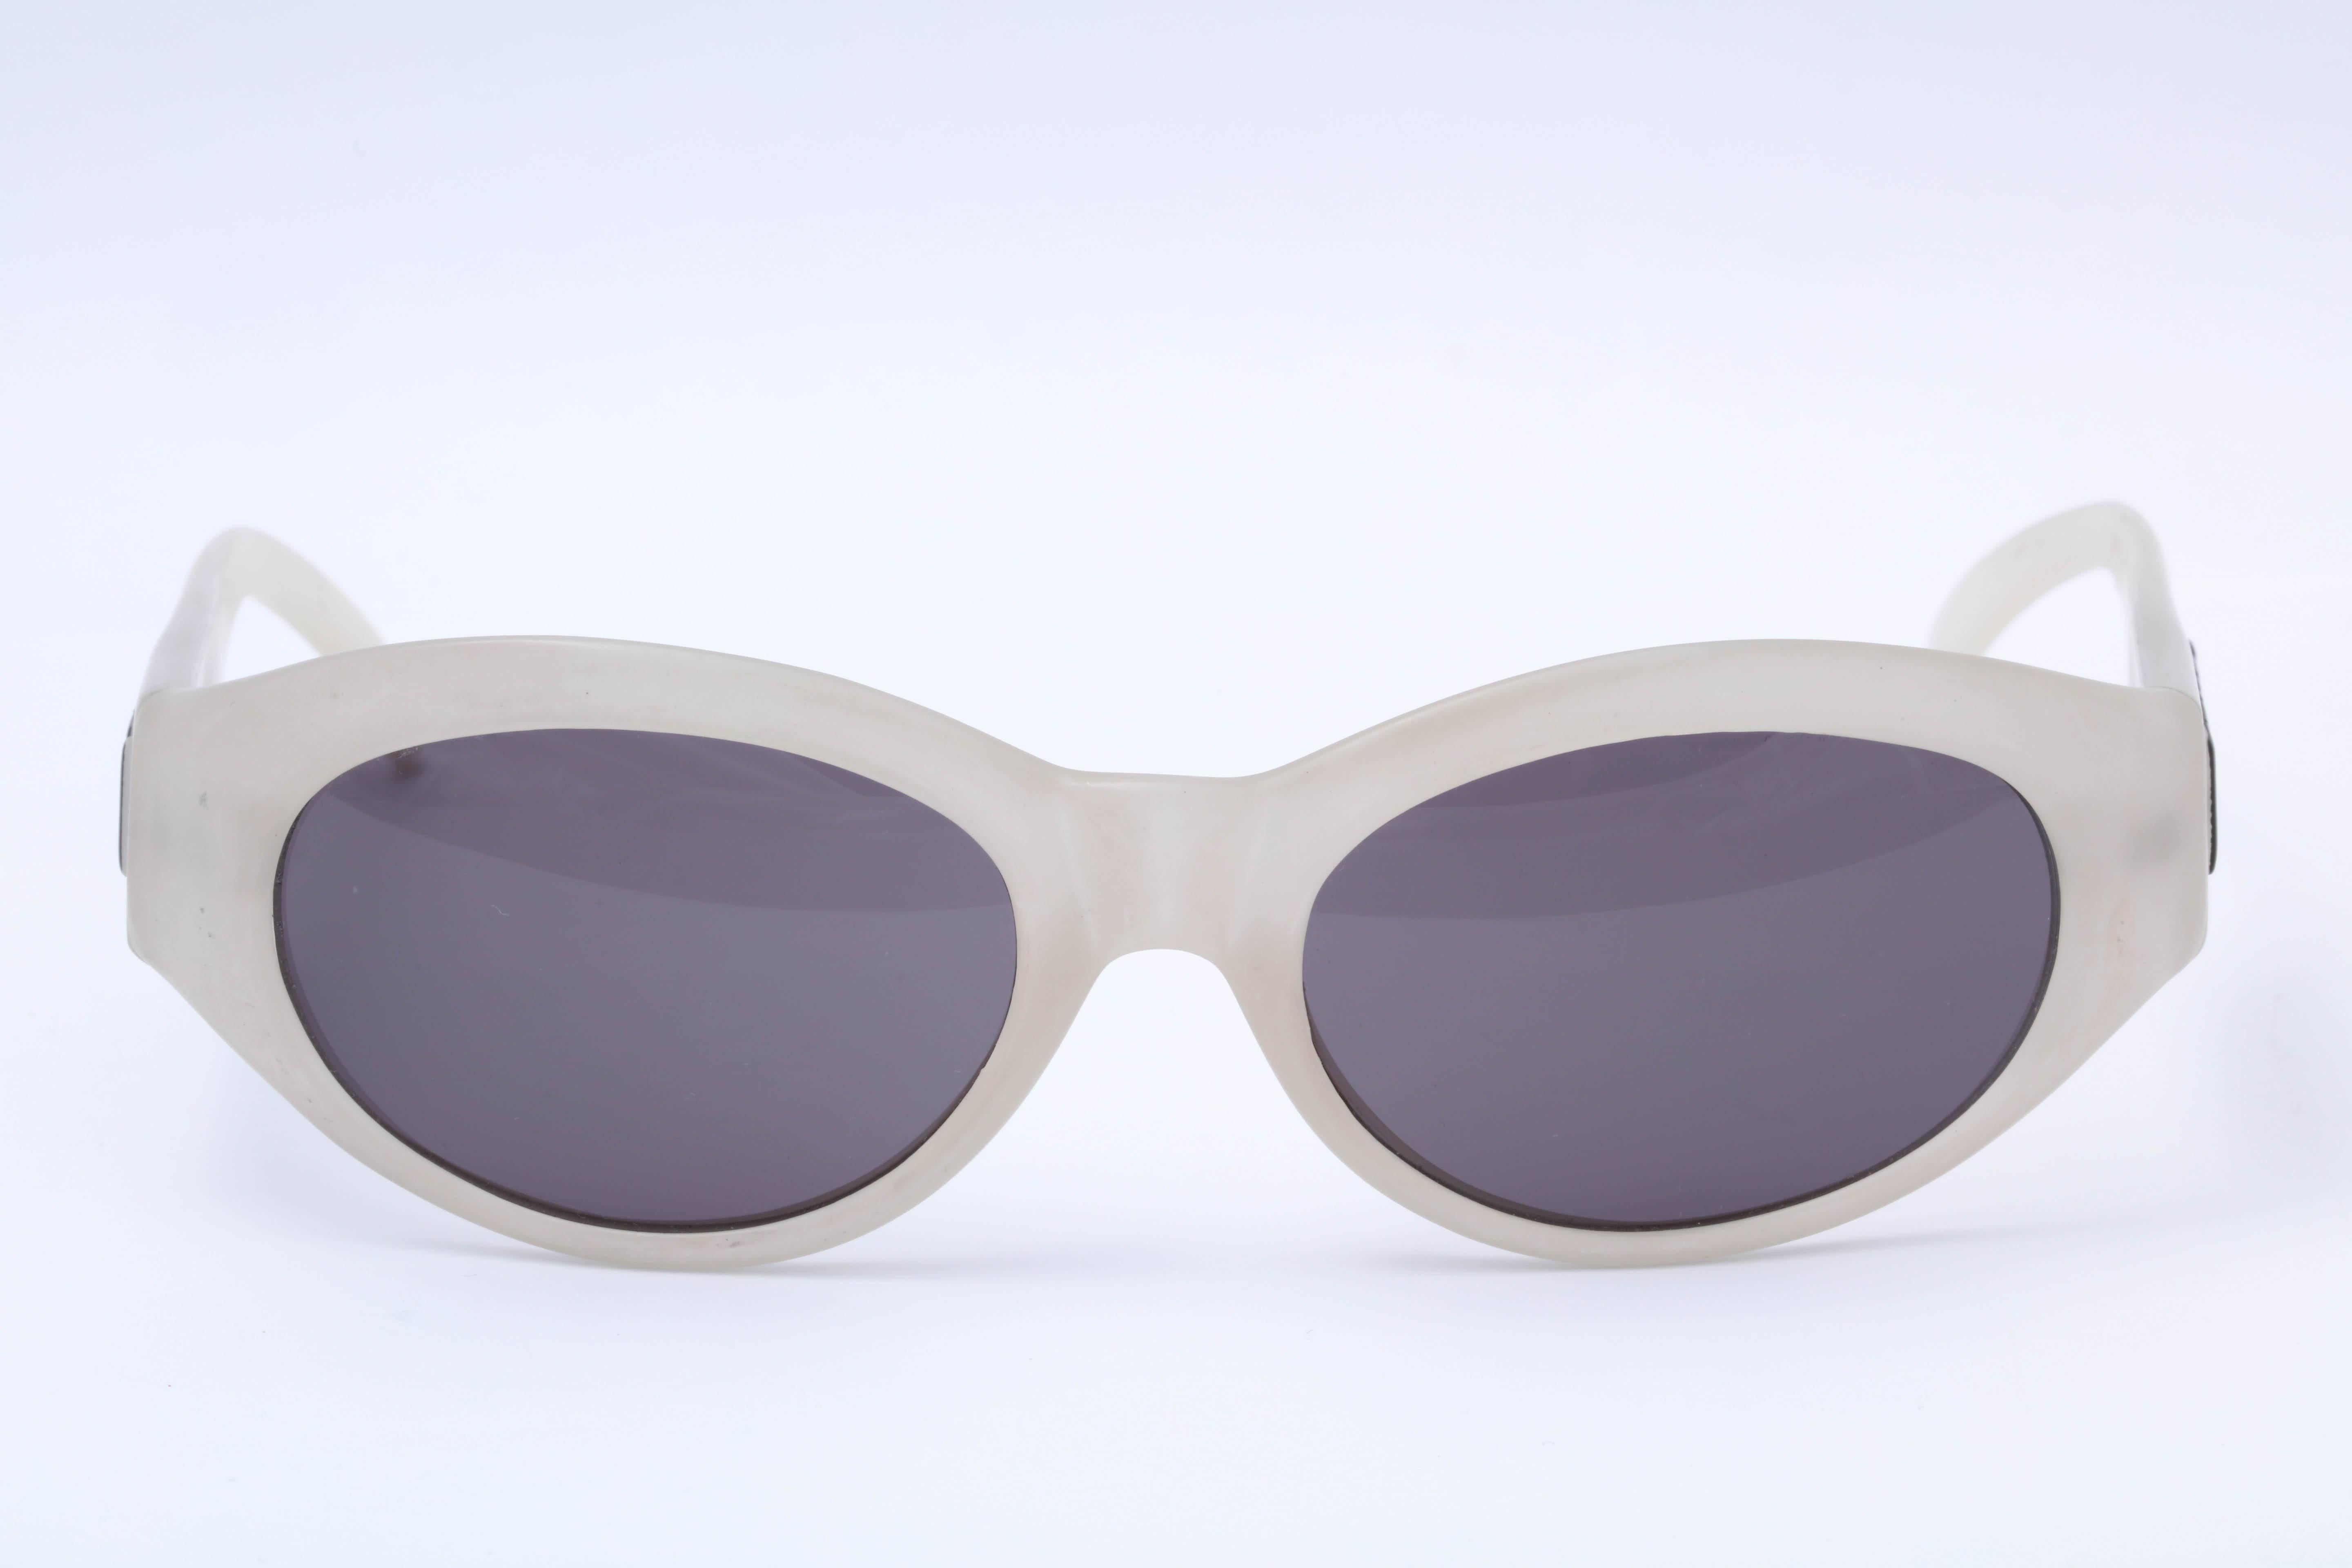 Vintage Fendi Logo Sunglasses In Excellent Condition For Sale In Chicago, IL